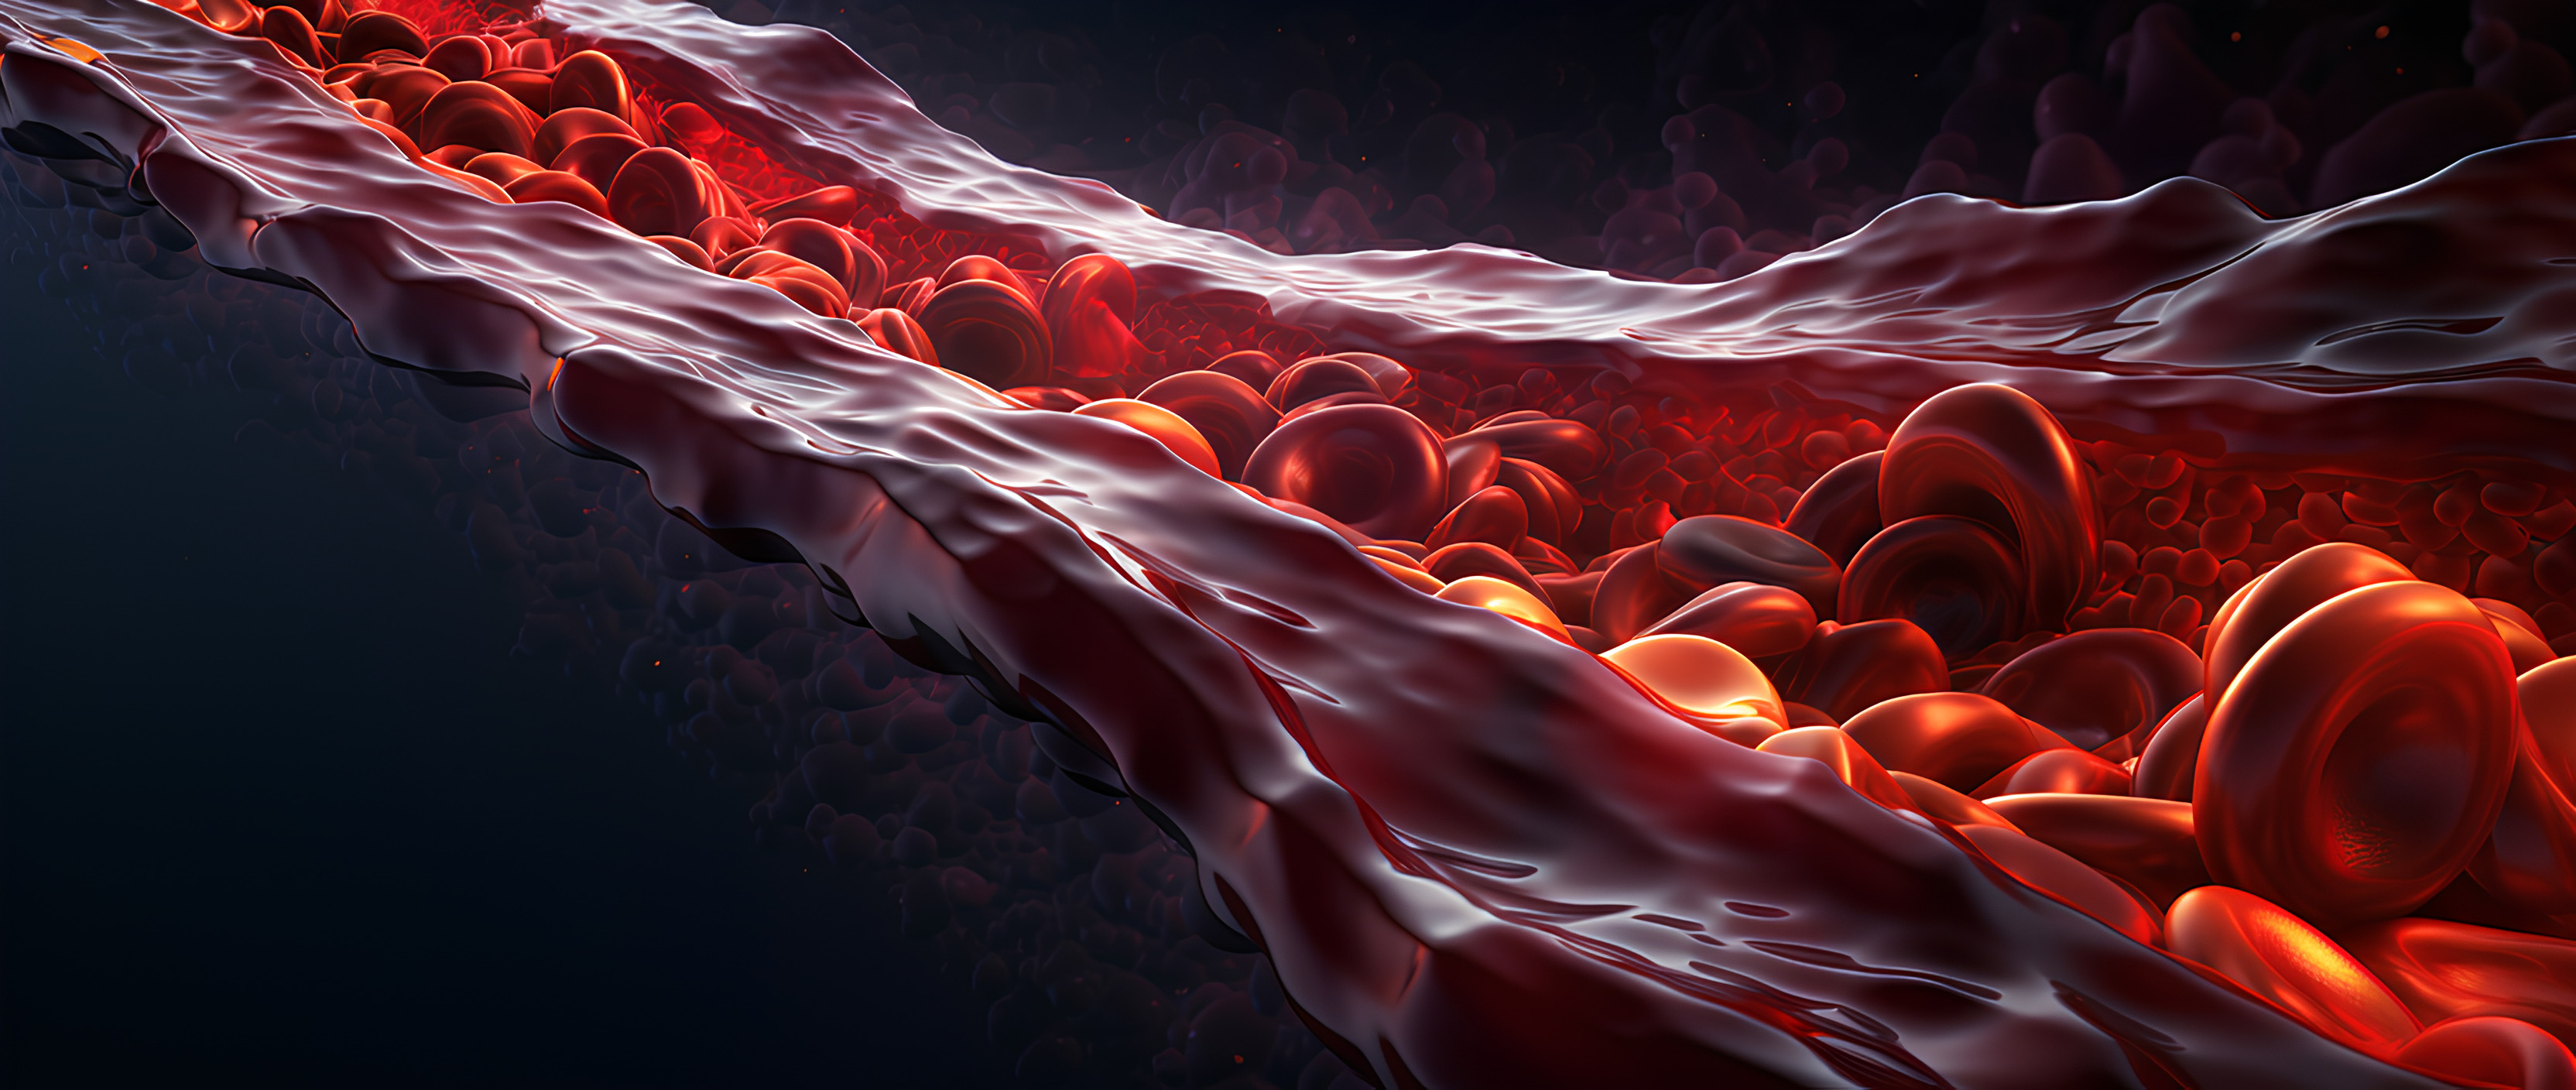 Platelets in the bloodstream